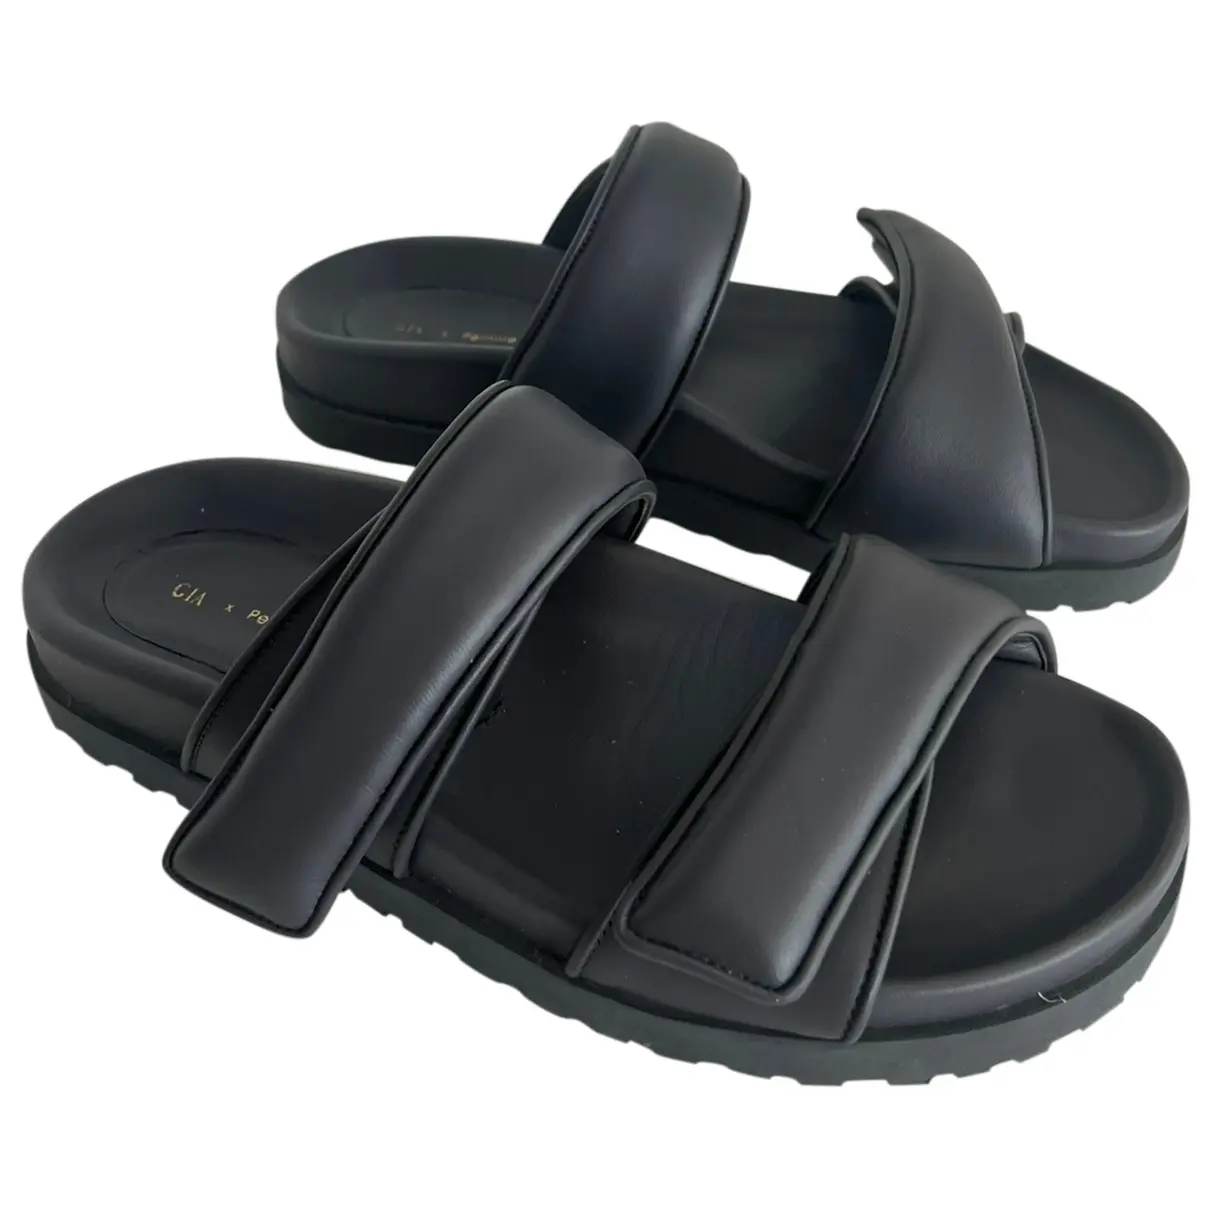 Leather sandals GIA X PERNILLE TEISBAEK